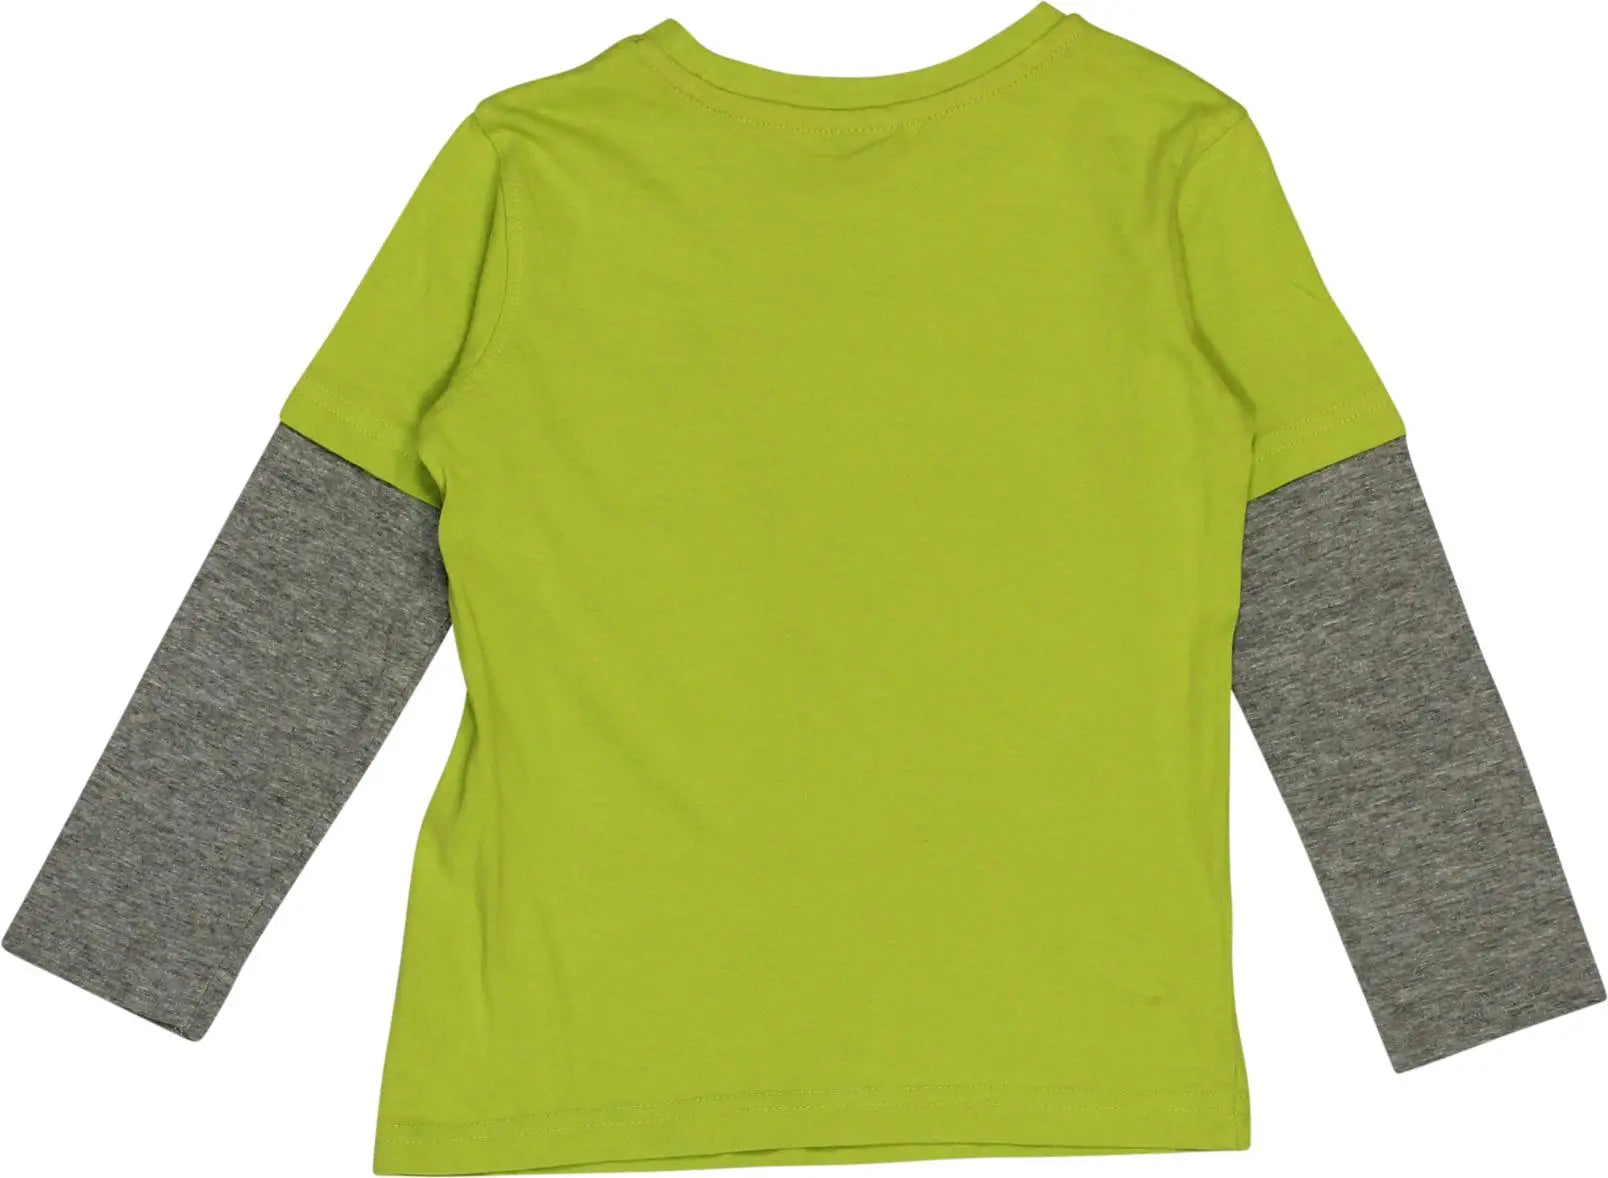 kiki & koko - Green Long Sleeve Shirt- ThriftTale.com - Vintage and second handclothing